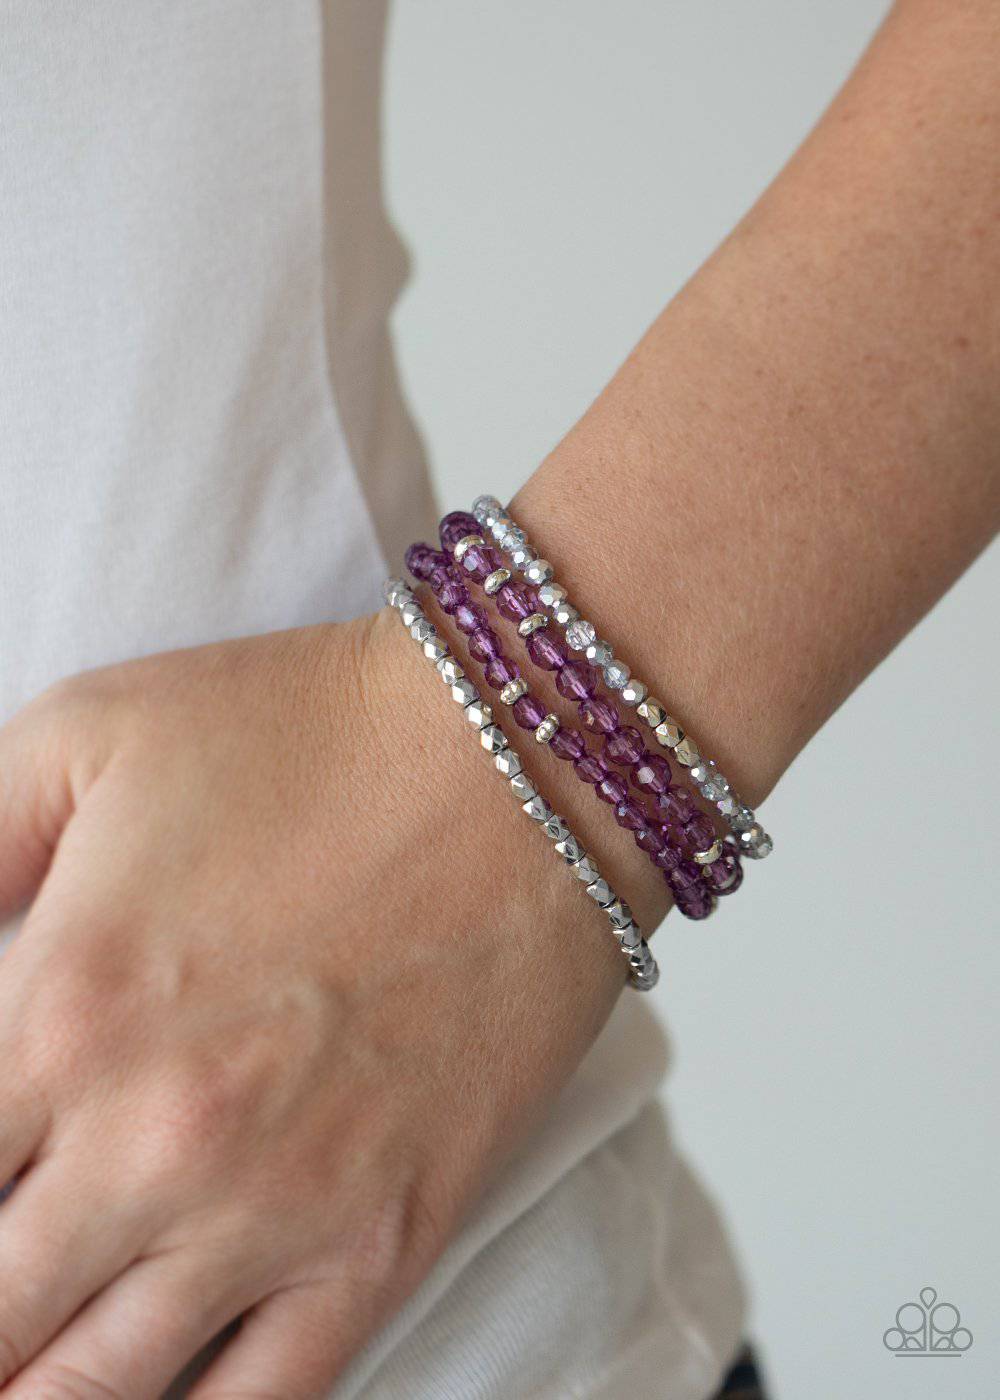 Crystal Crush - Purple Metallic Stretchy Bracelet - Paparazzi Accessories - GlaMarous Titi Jewels